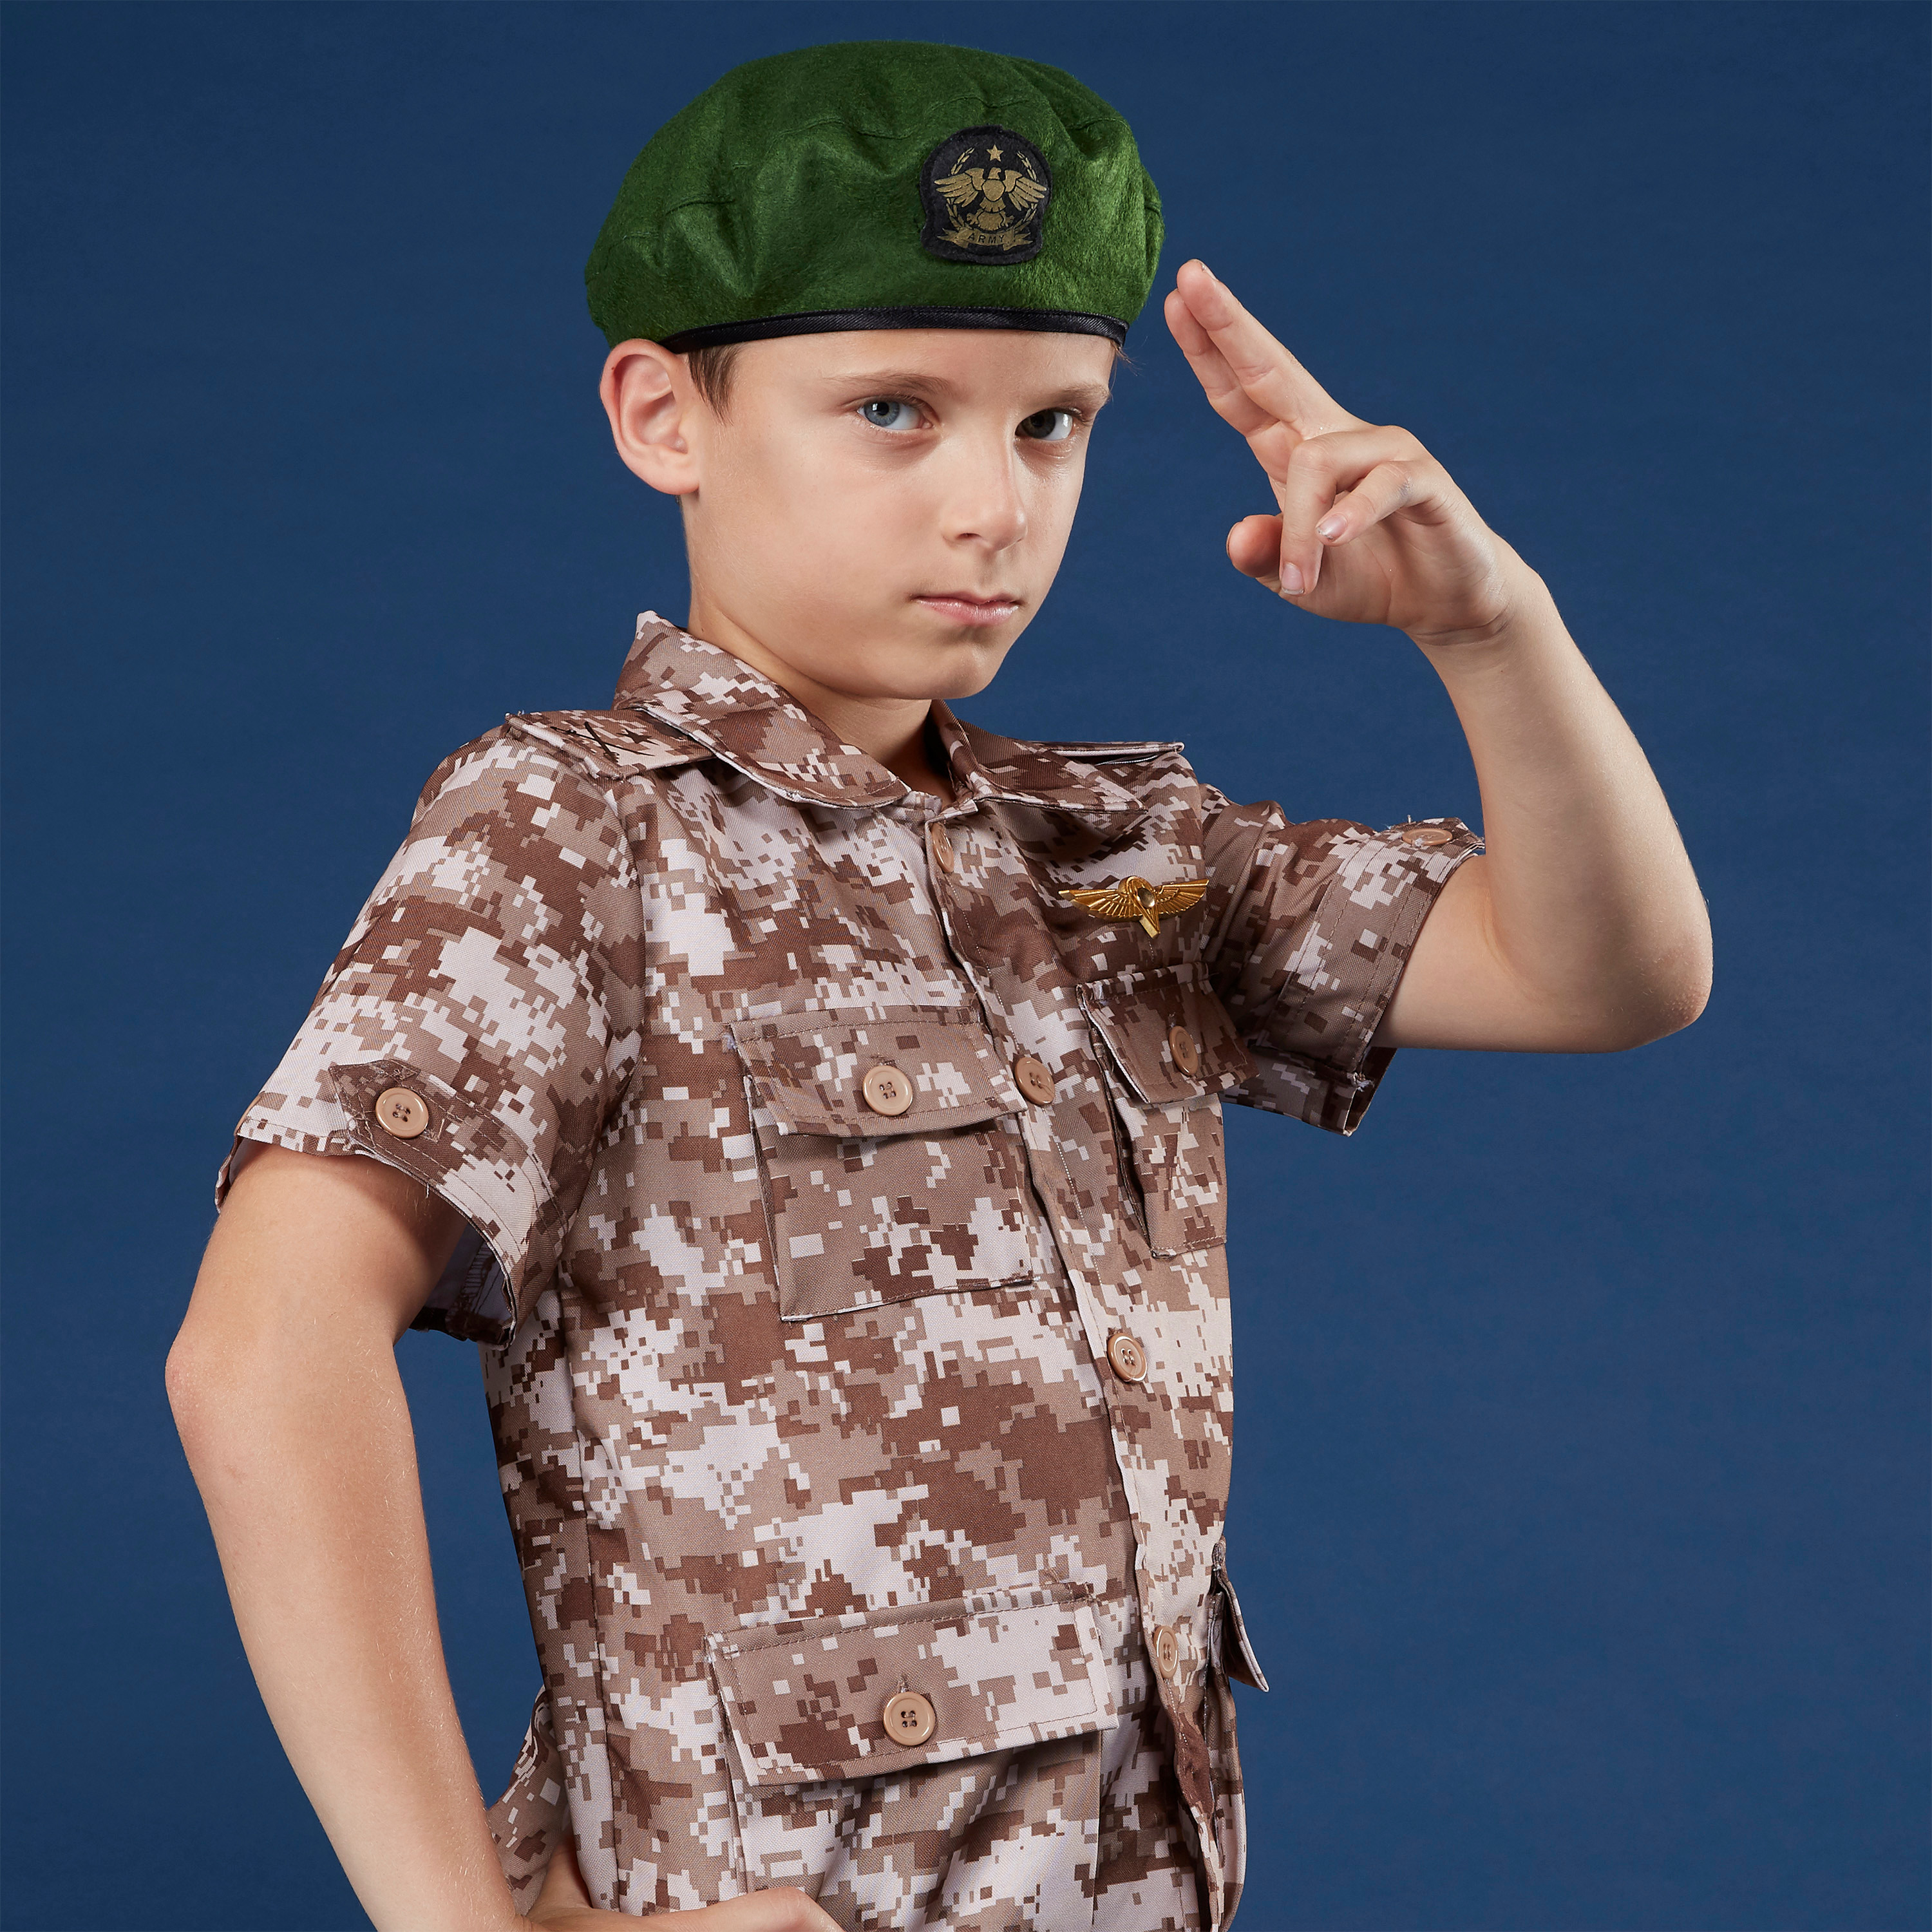 KAKU FANCY DRESSES National Hero Indian Military Costume -Green, 5-6 Years,  For Boys & Girls Kids Costume Wear Price in India - Buy KAKU FANCY DRESSES  National Hero Indian Military Costume -Green,